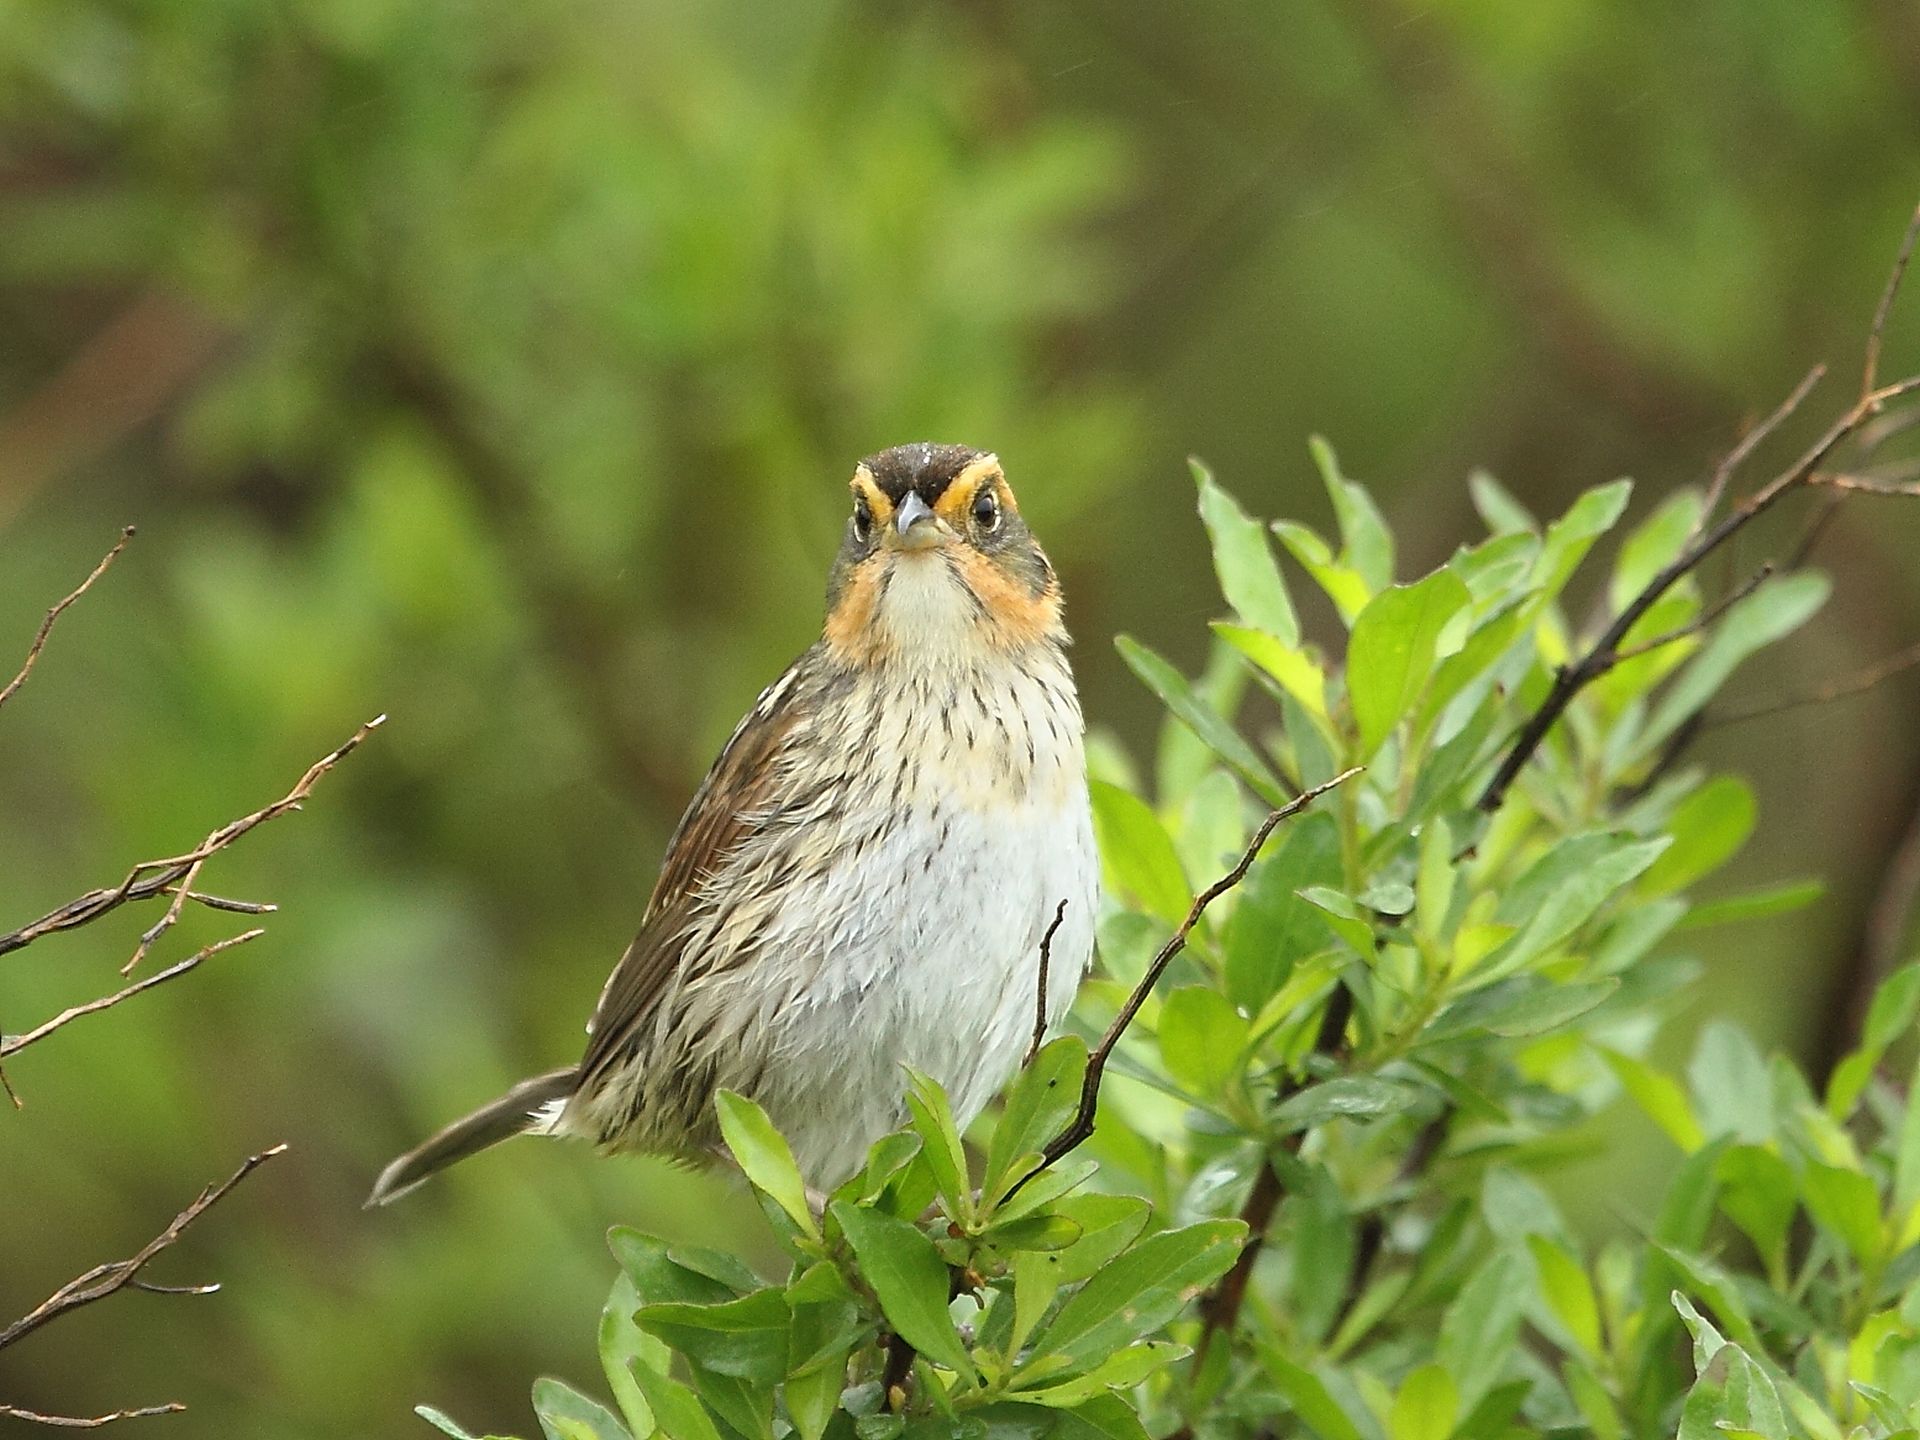 saltmarsh sparrow perched in a bigleaf marsh-elder